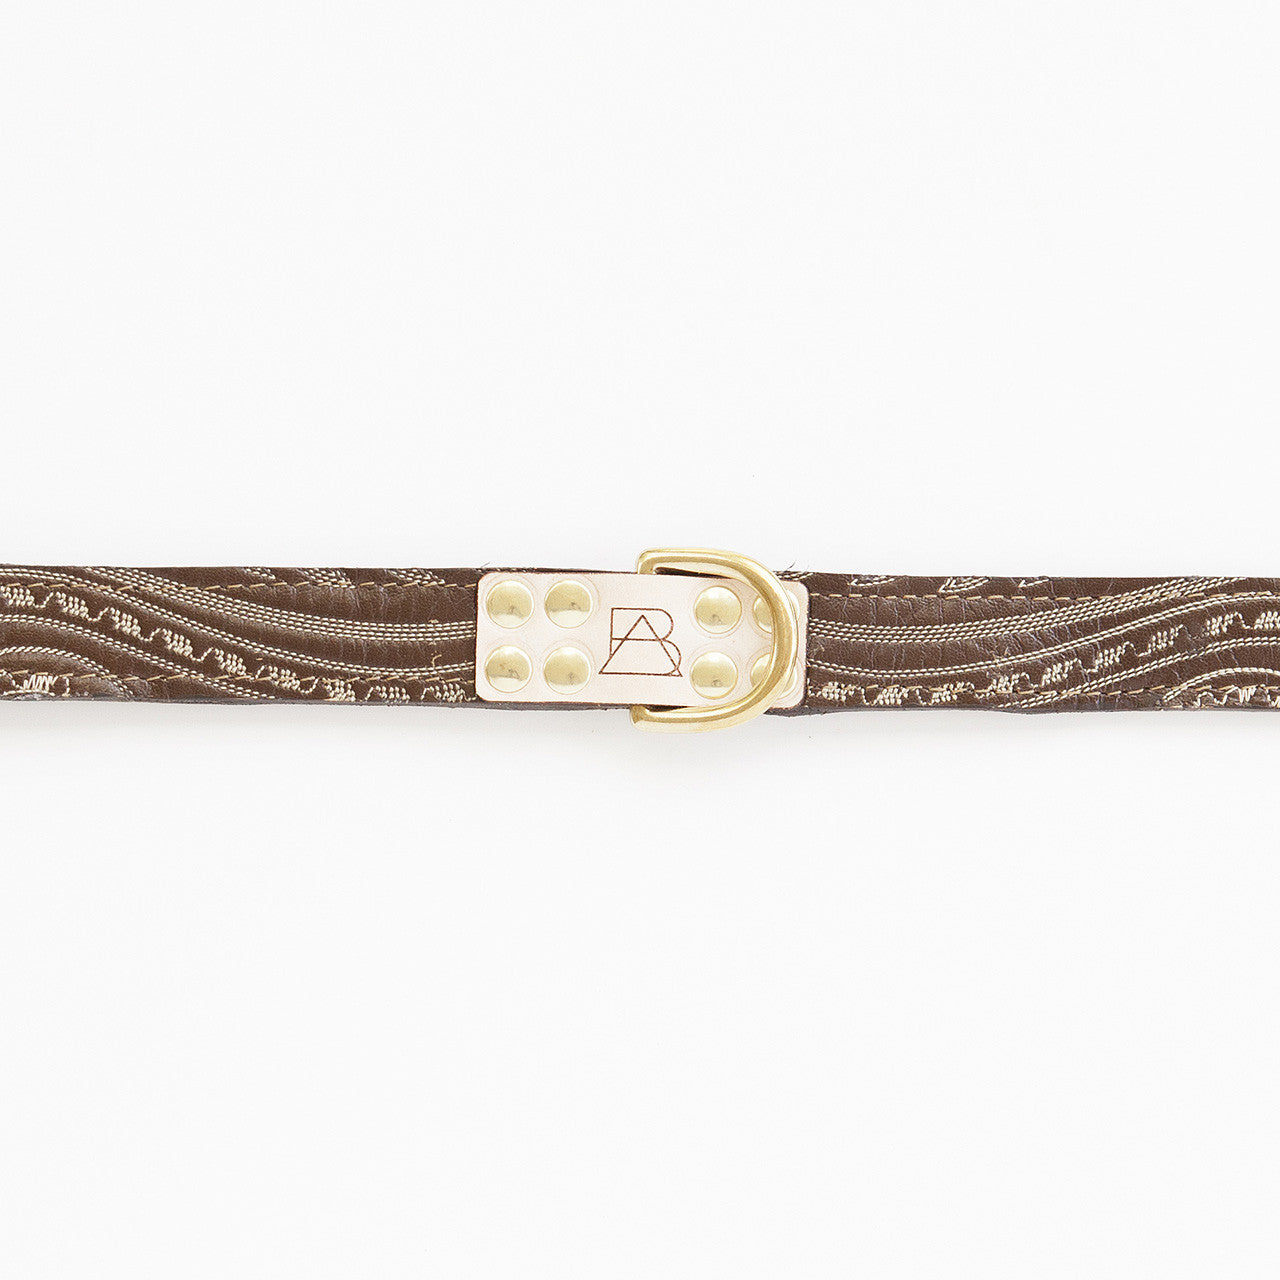 Camo Dog Collar with Chocolate Leather + Ivory Swirl Stitching (tag)